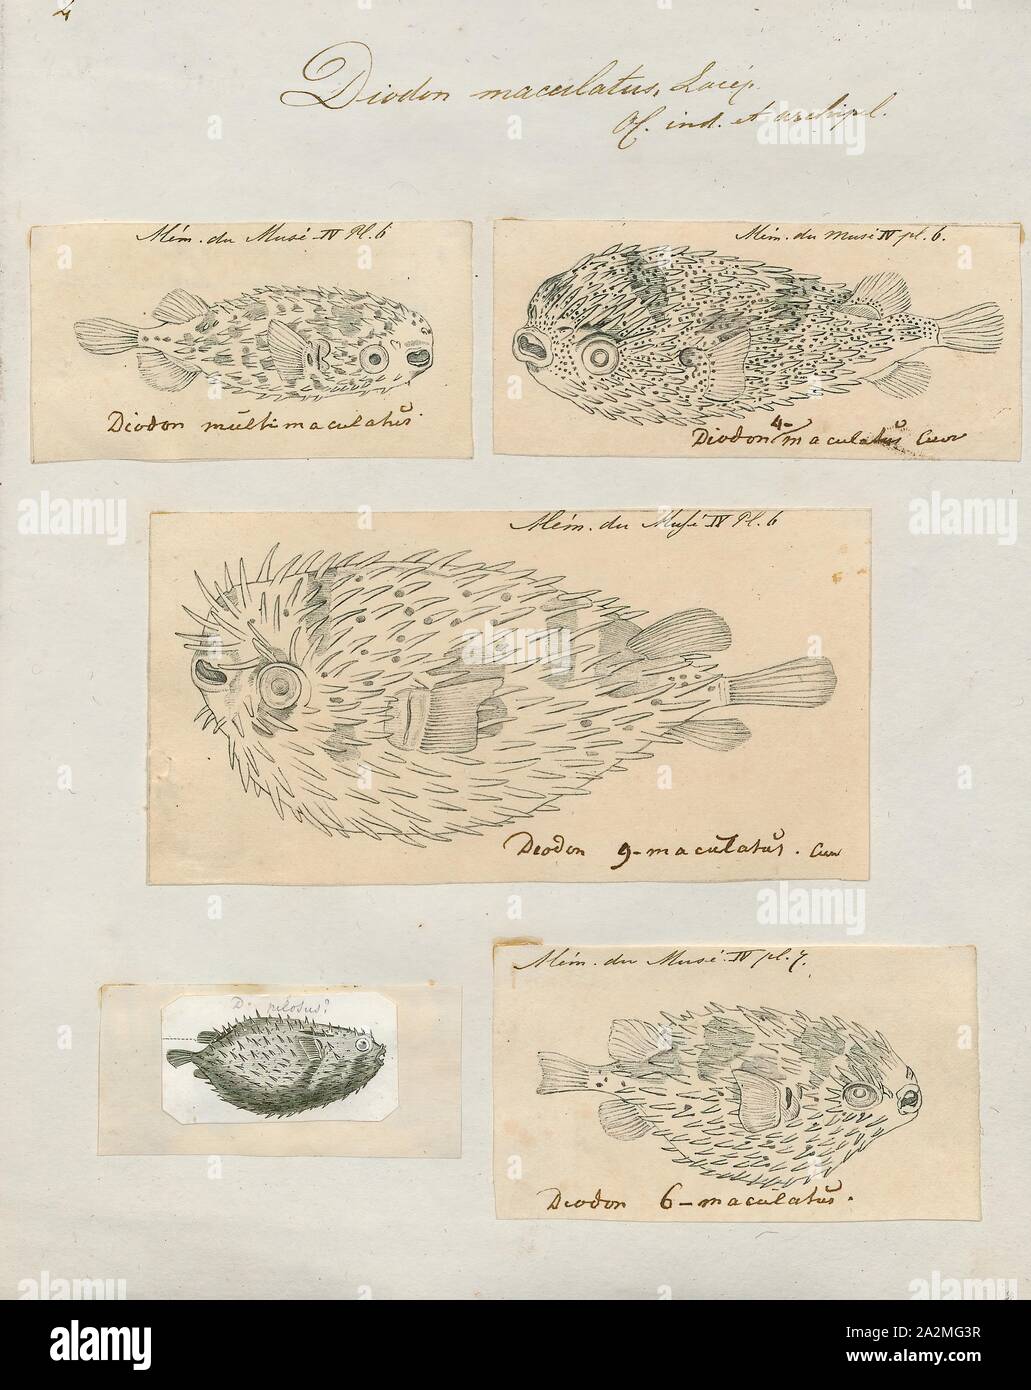 Diodon maculatus, Imprimer, 1700-1880 Banque D'Images